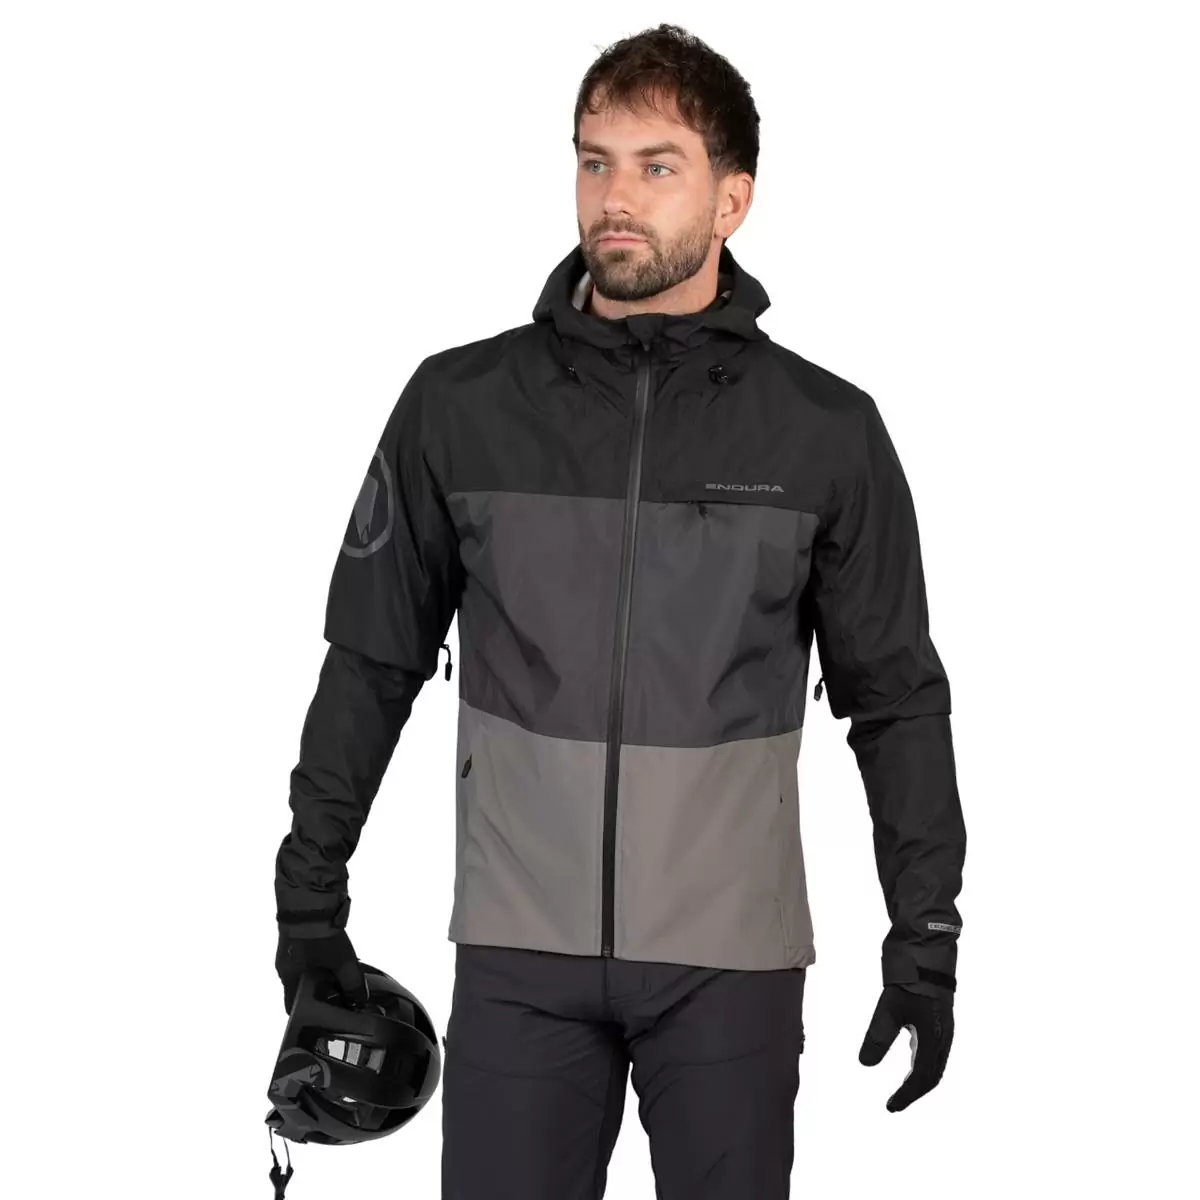 SingleTrack Jacket II Waterproof MTB Jacket Black Size XL - image